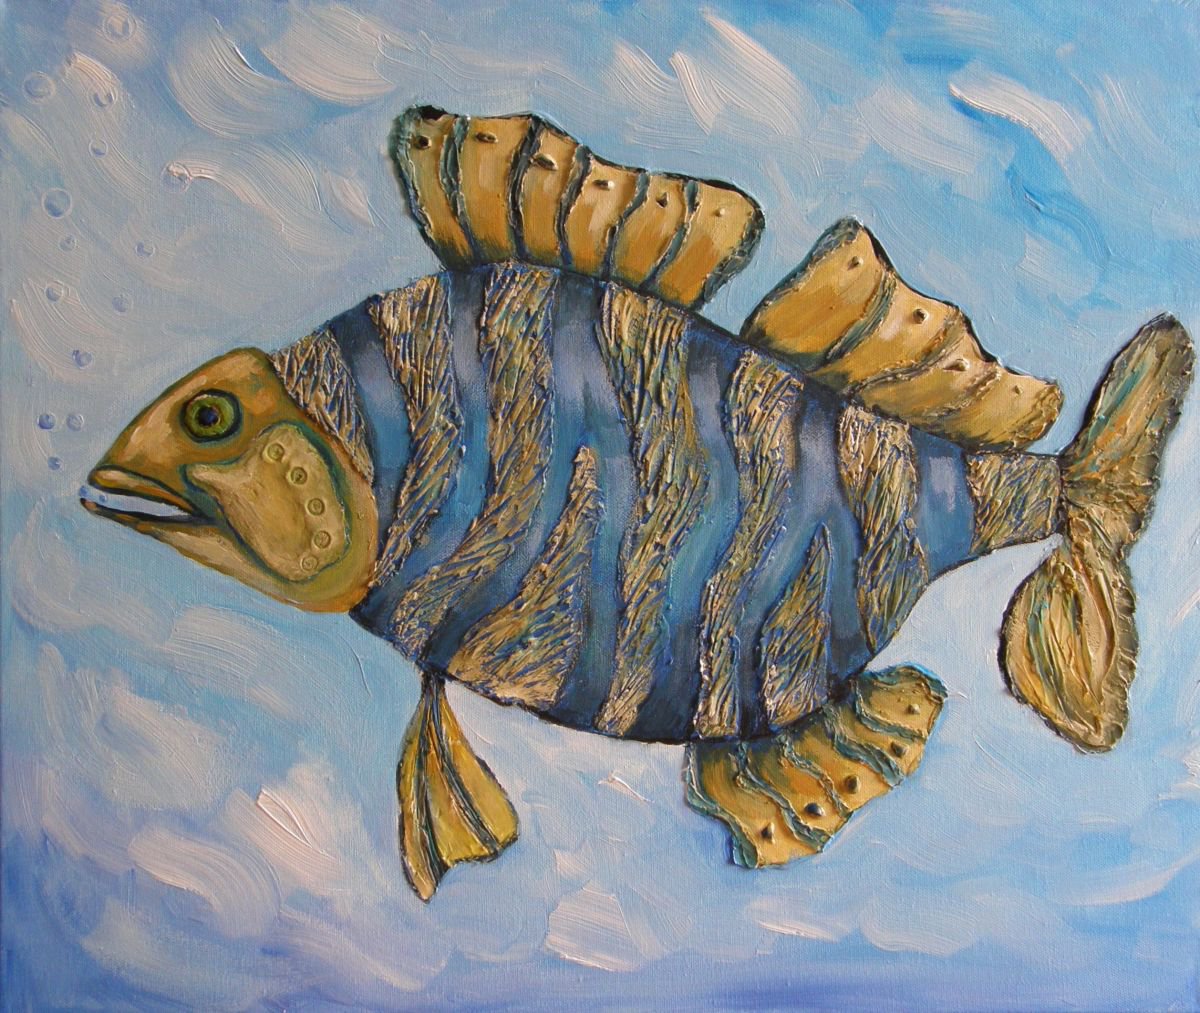 Fish by Maia Nikolov